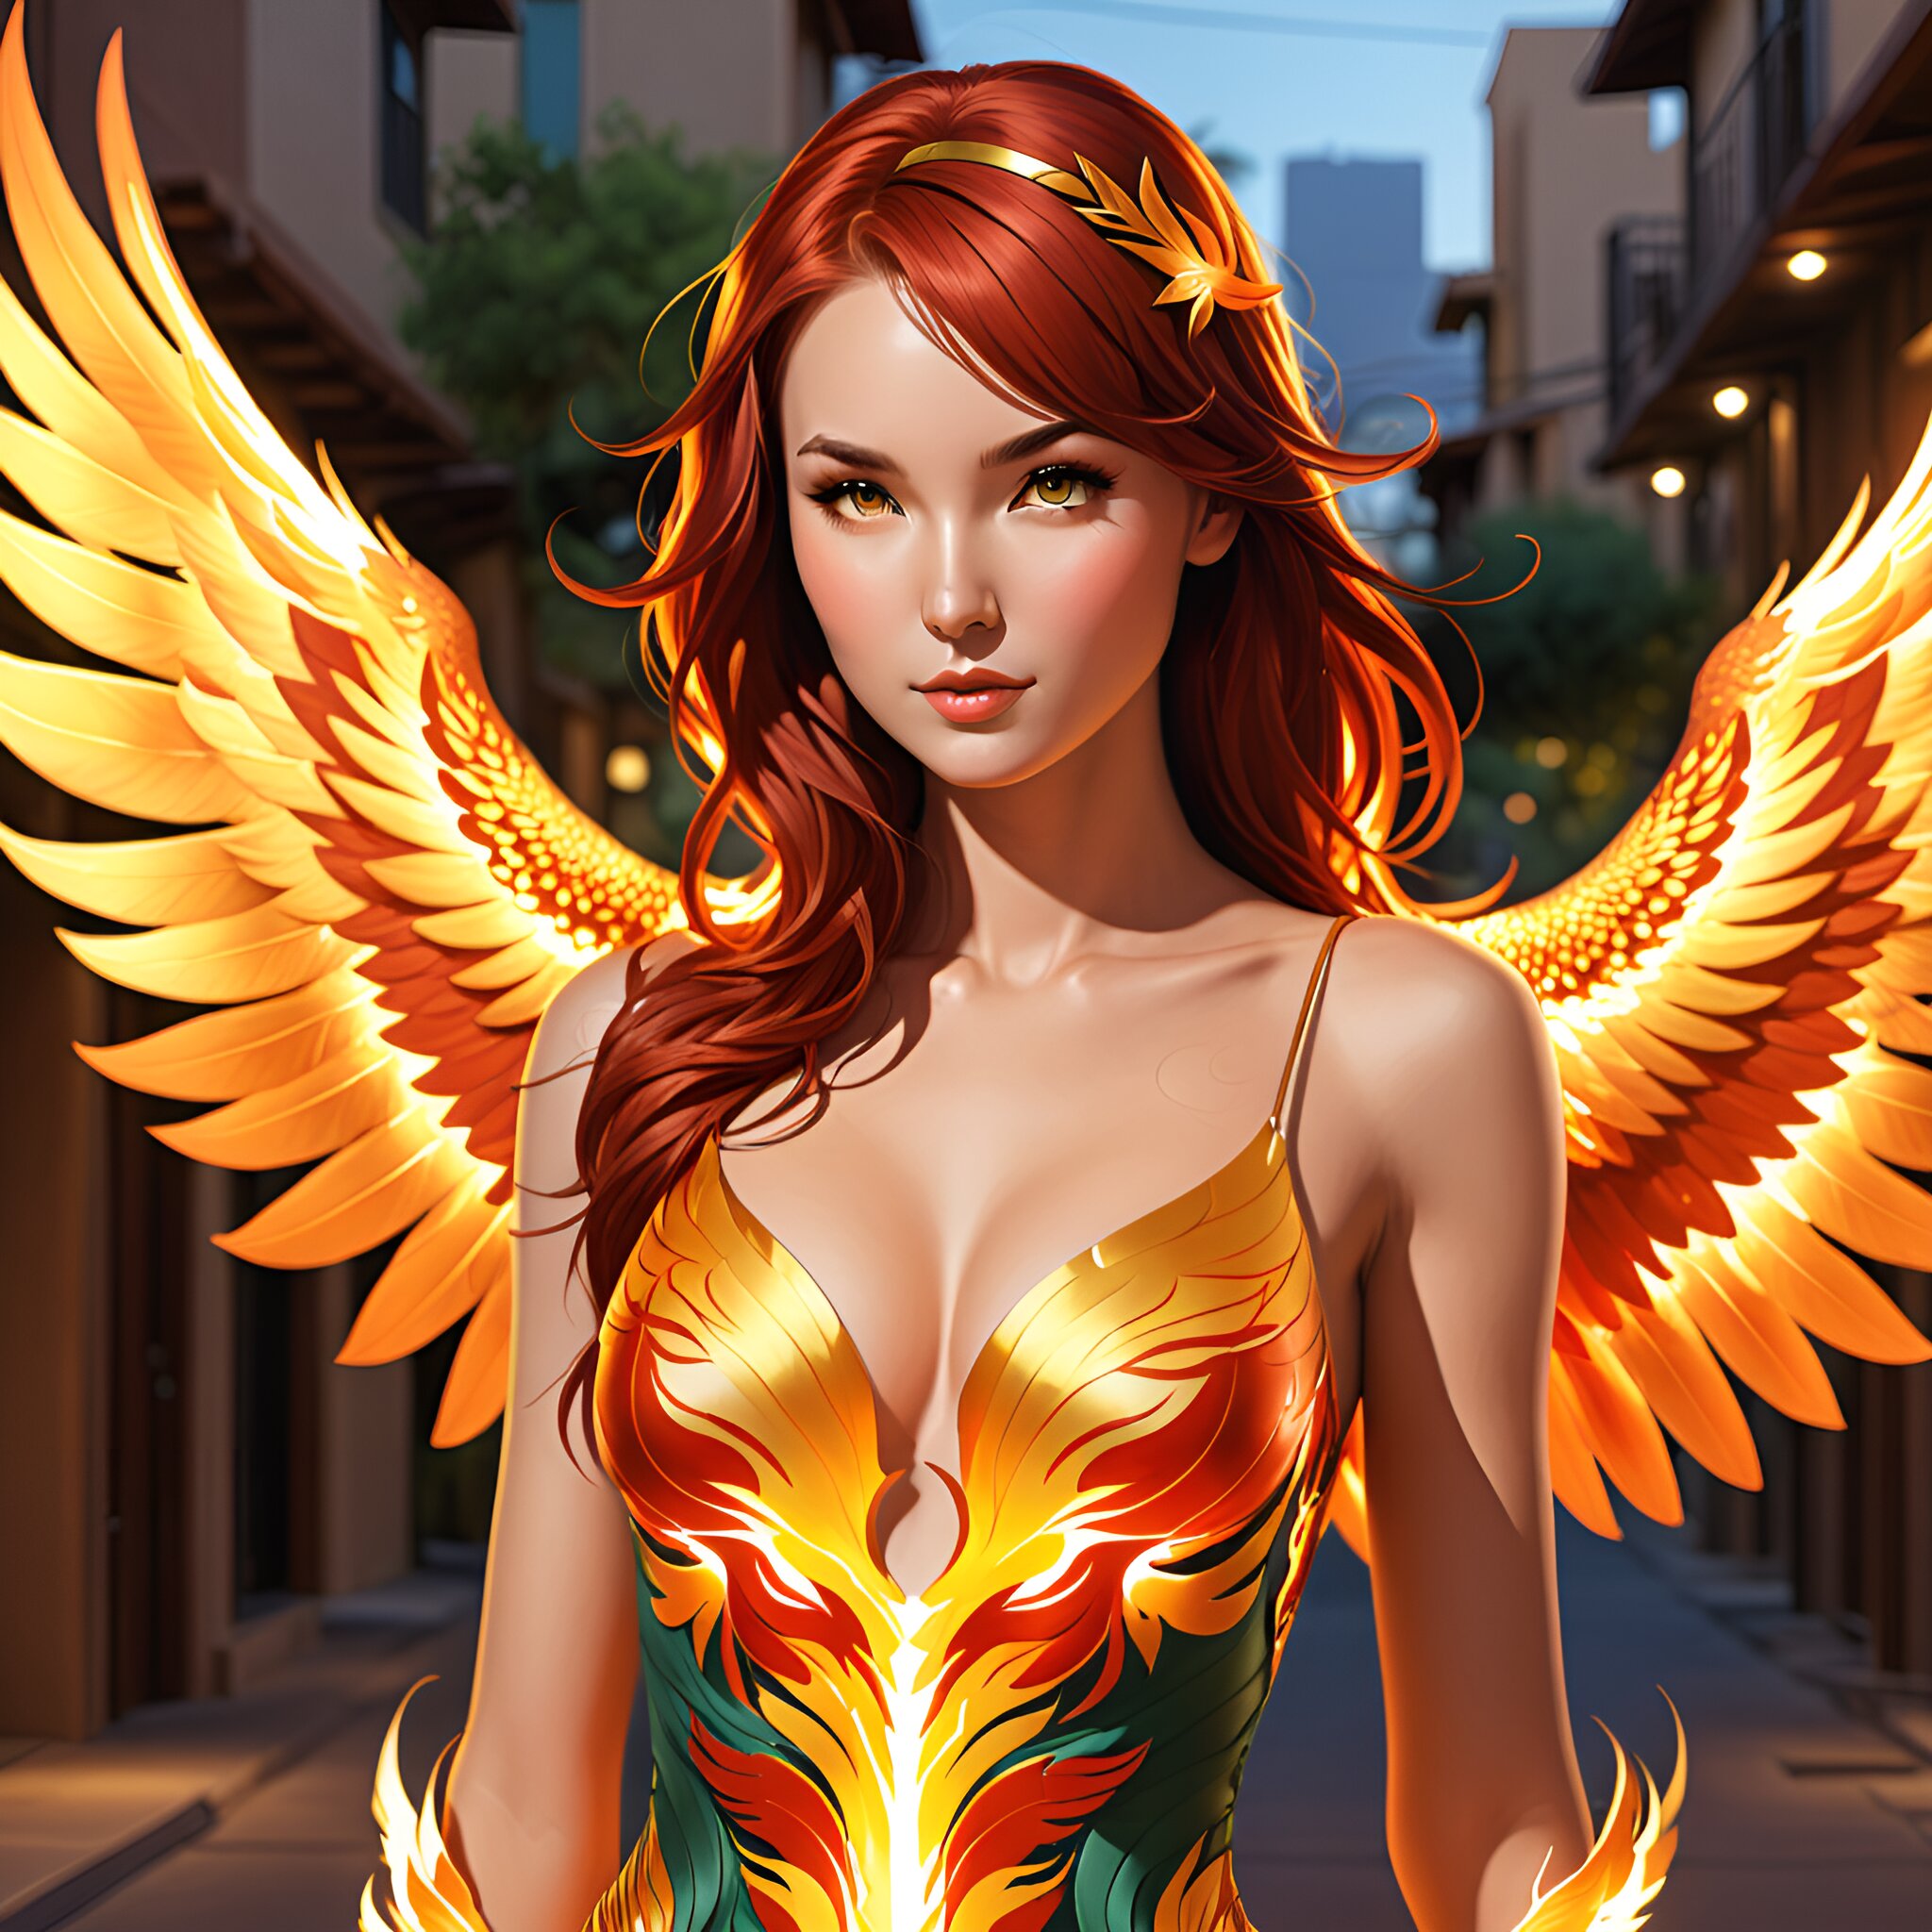 The phoenix girl